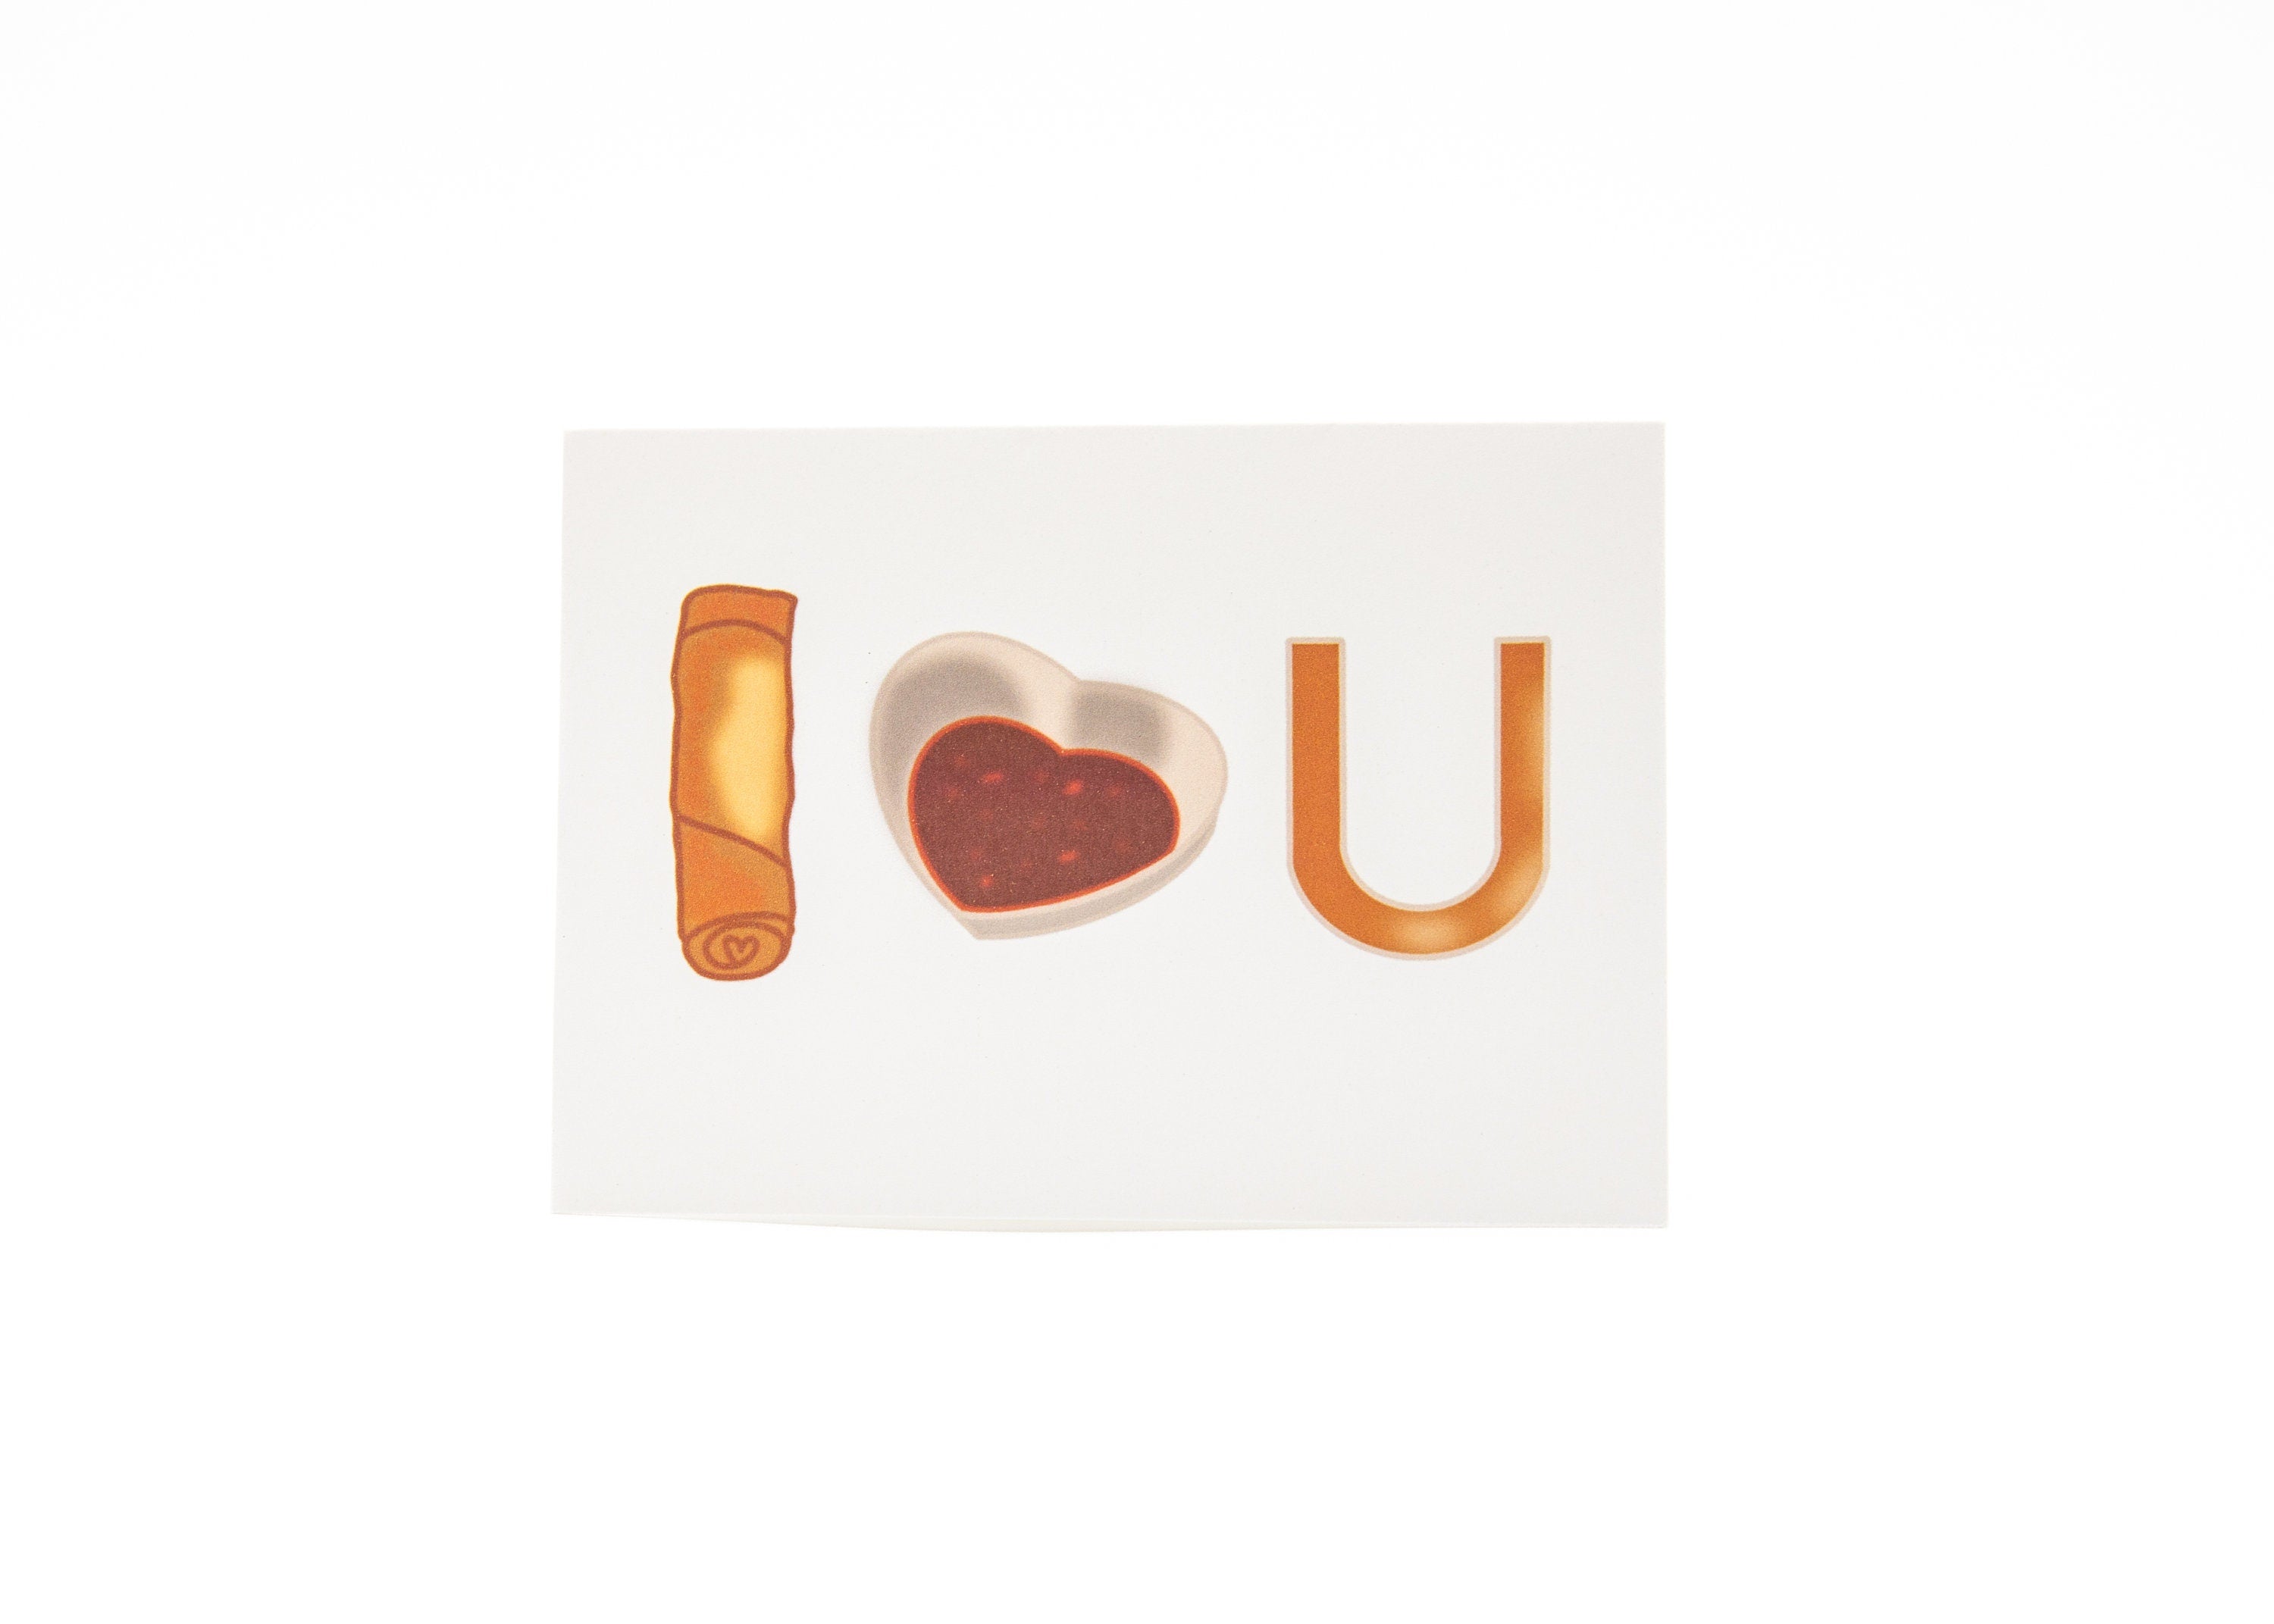 I Love You (Lumpia) Greeting Card, Homemade Greeting Card, I love you, Valentine's Day Card, Philippines, Tagalog, Filipino